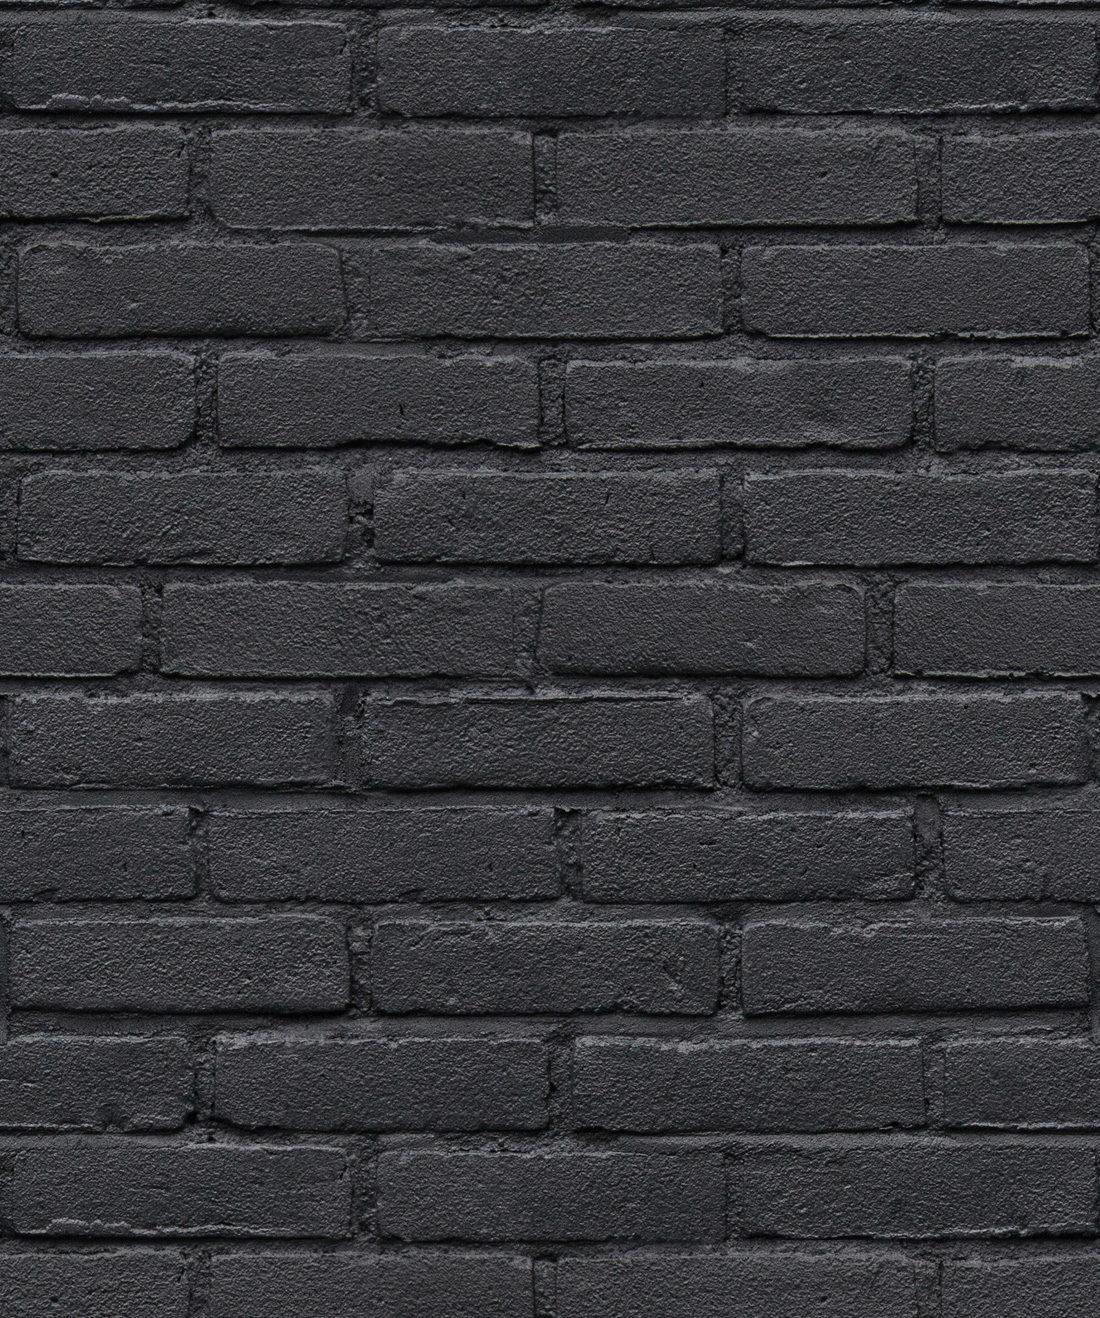 Black Bricks Wallpapers Wallpaper Cave